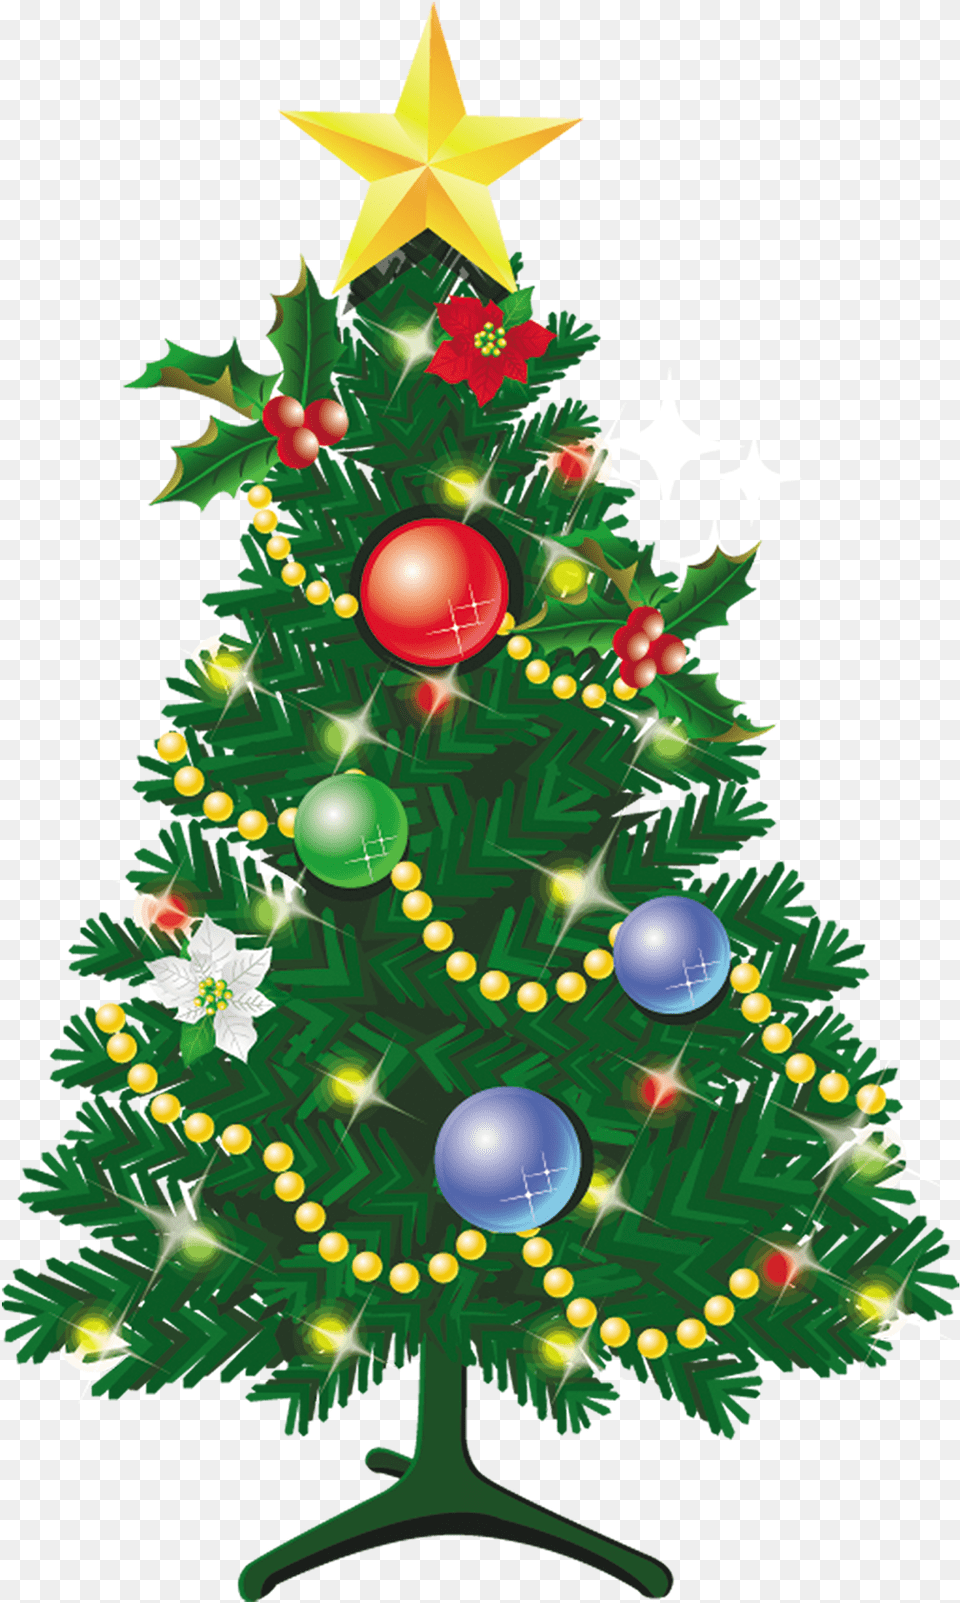 Christmas Tree Illustration Christmas Tree Vector, Plant, Christmas Decorations, Festival, Christmas Tree Free Png Download